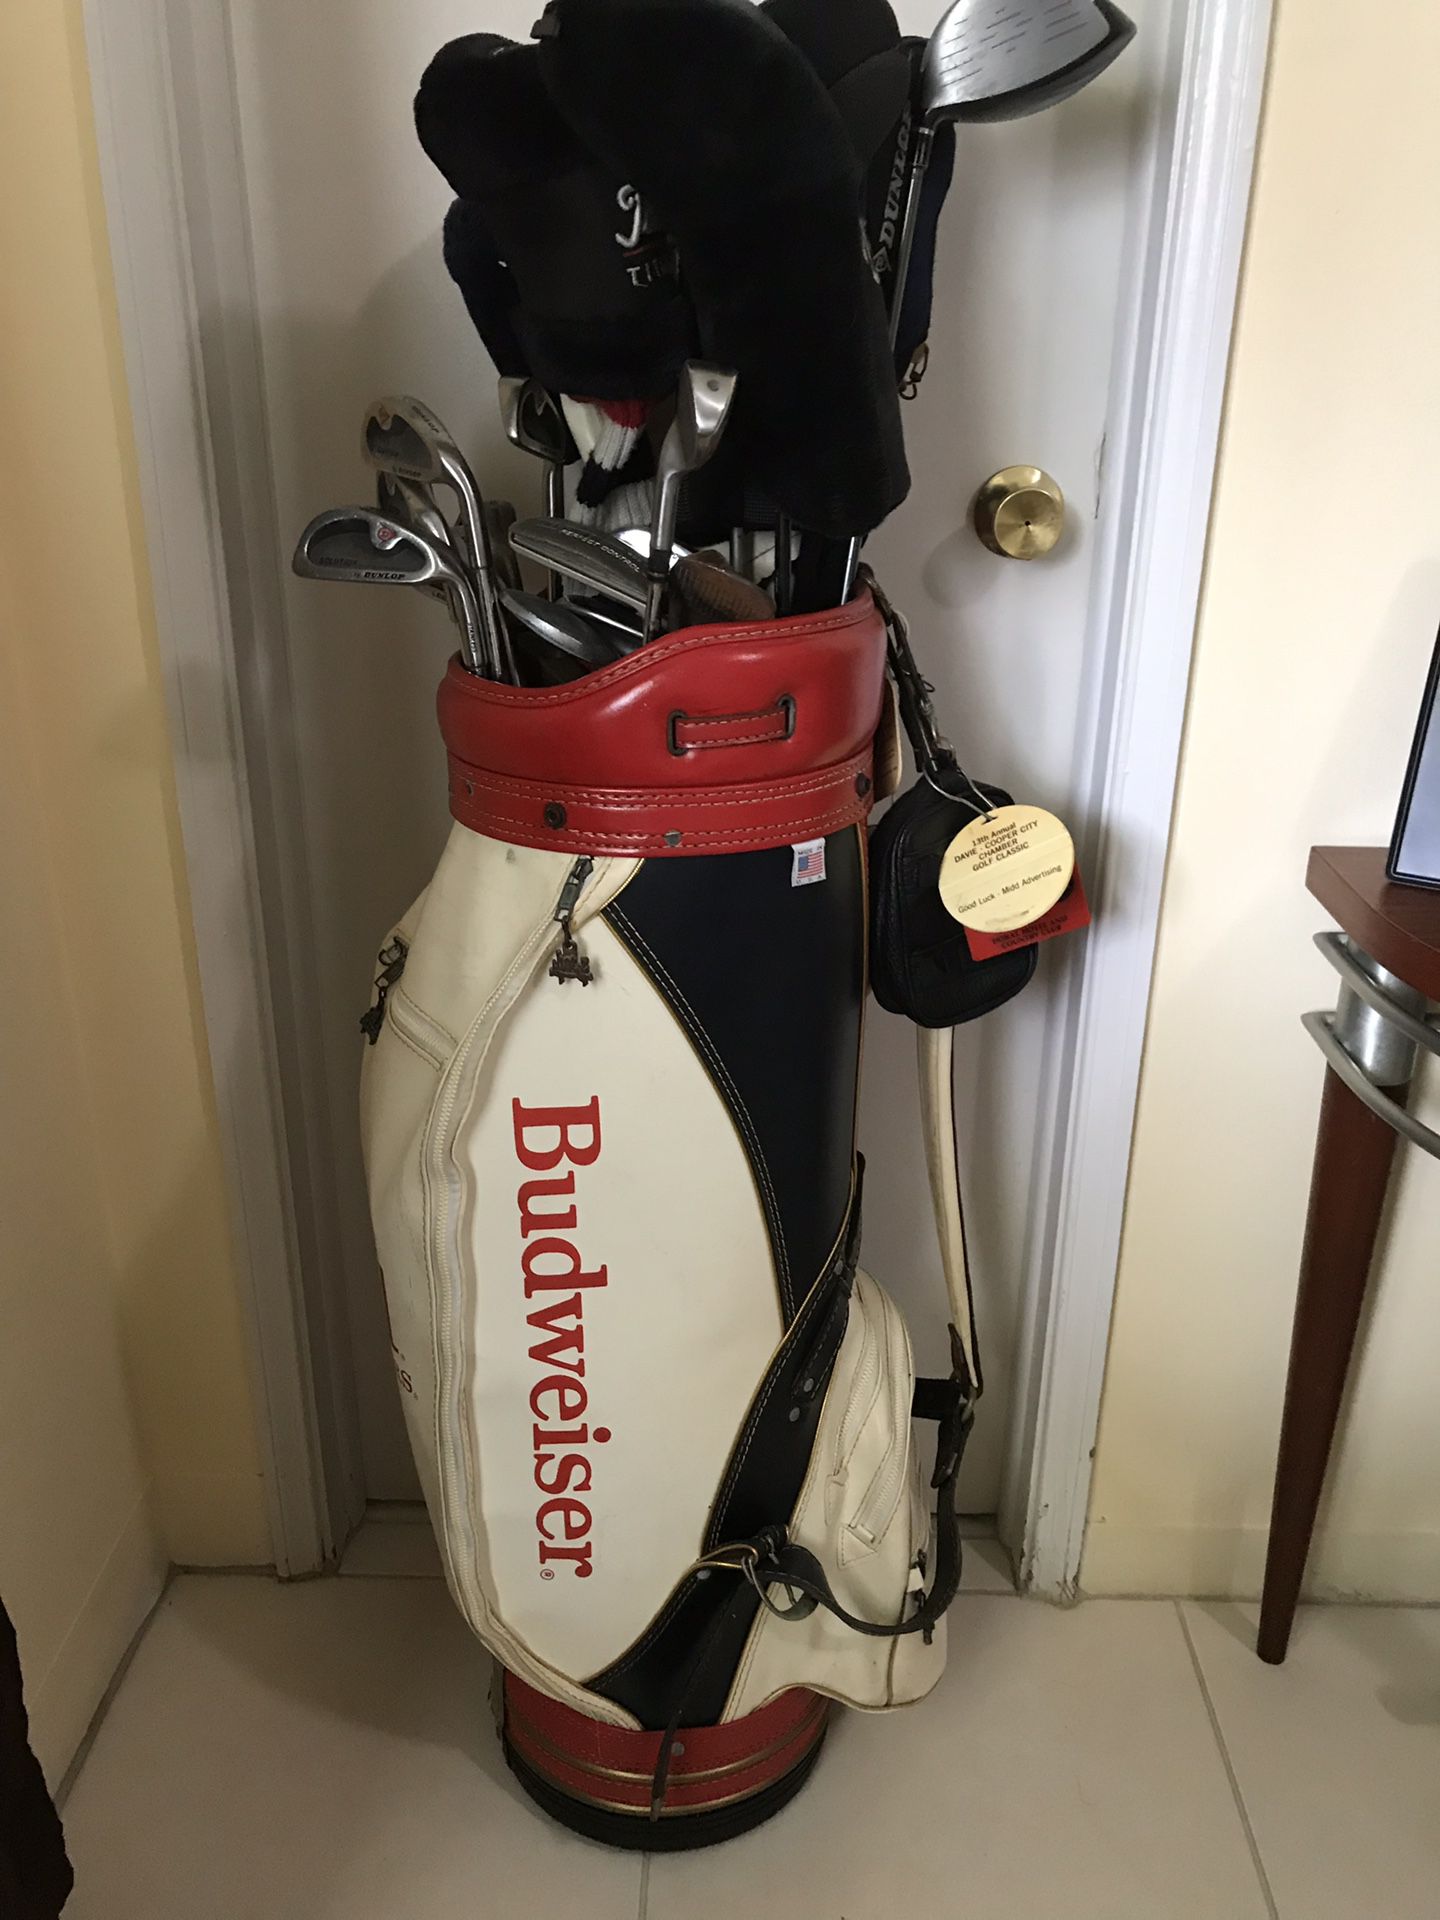 Vintage leather Golf Bag full of clubs